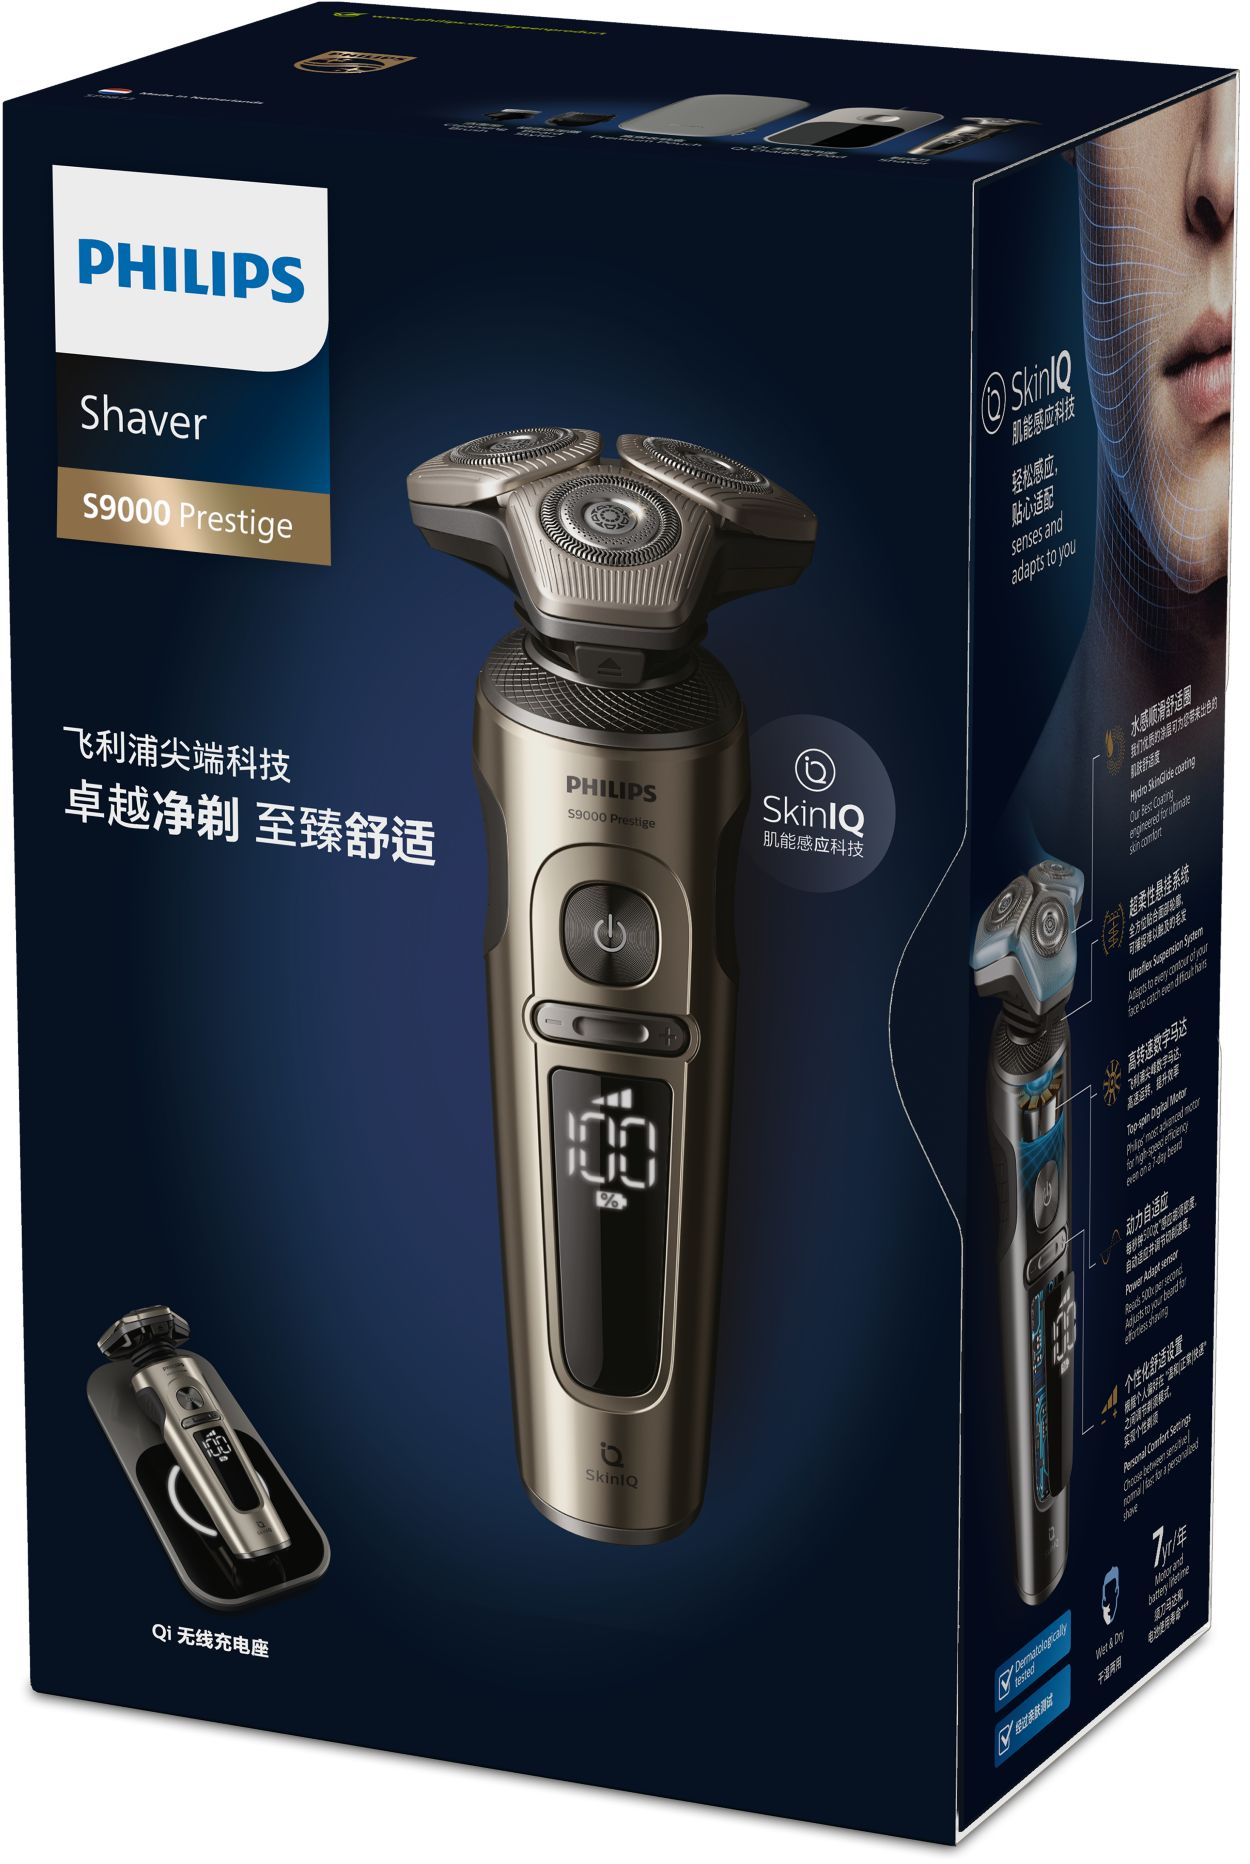 Shaver S9000 Prestige 干湿两用电动剃须刀SP9873/14 | Philips -飞利浦